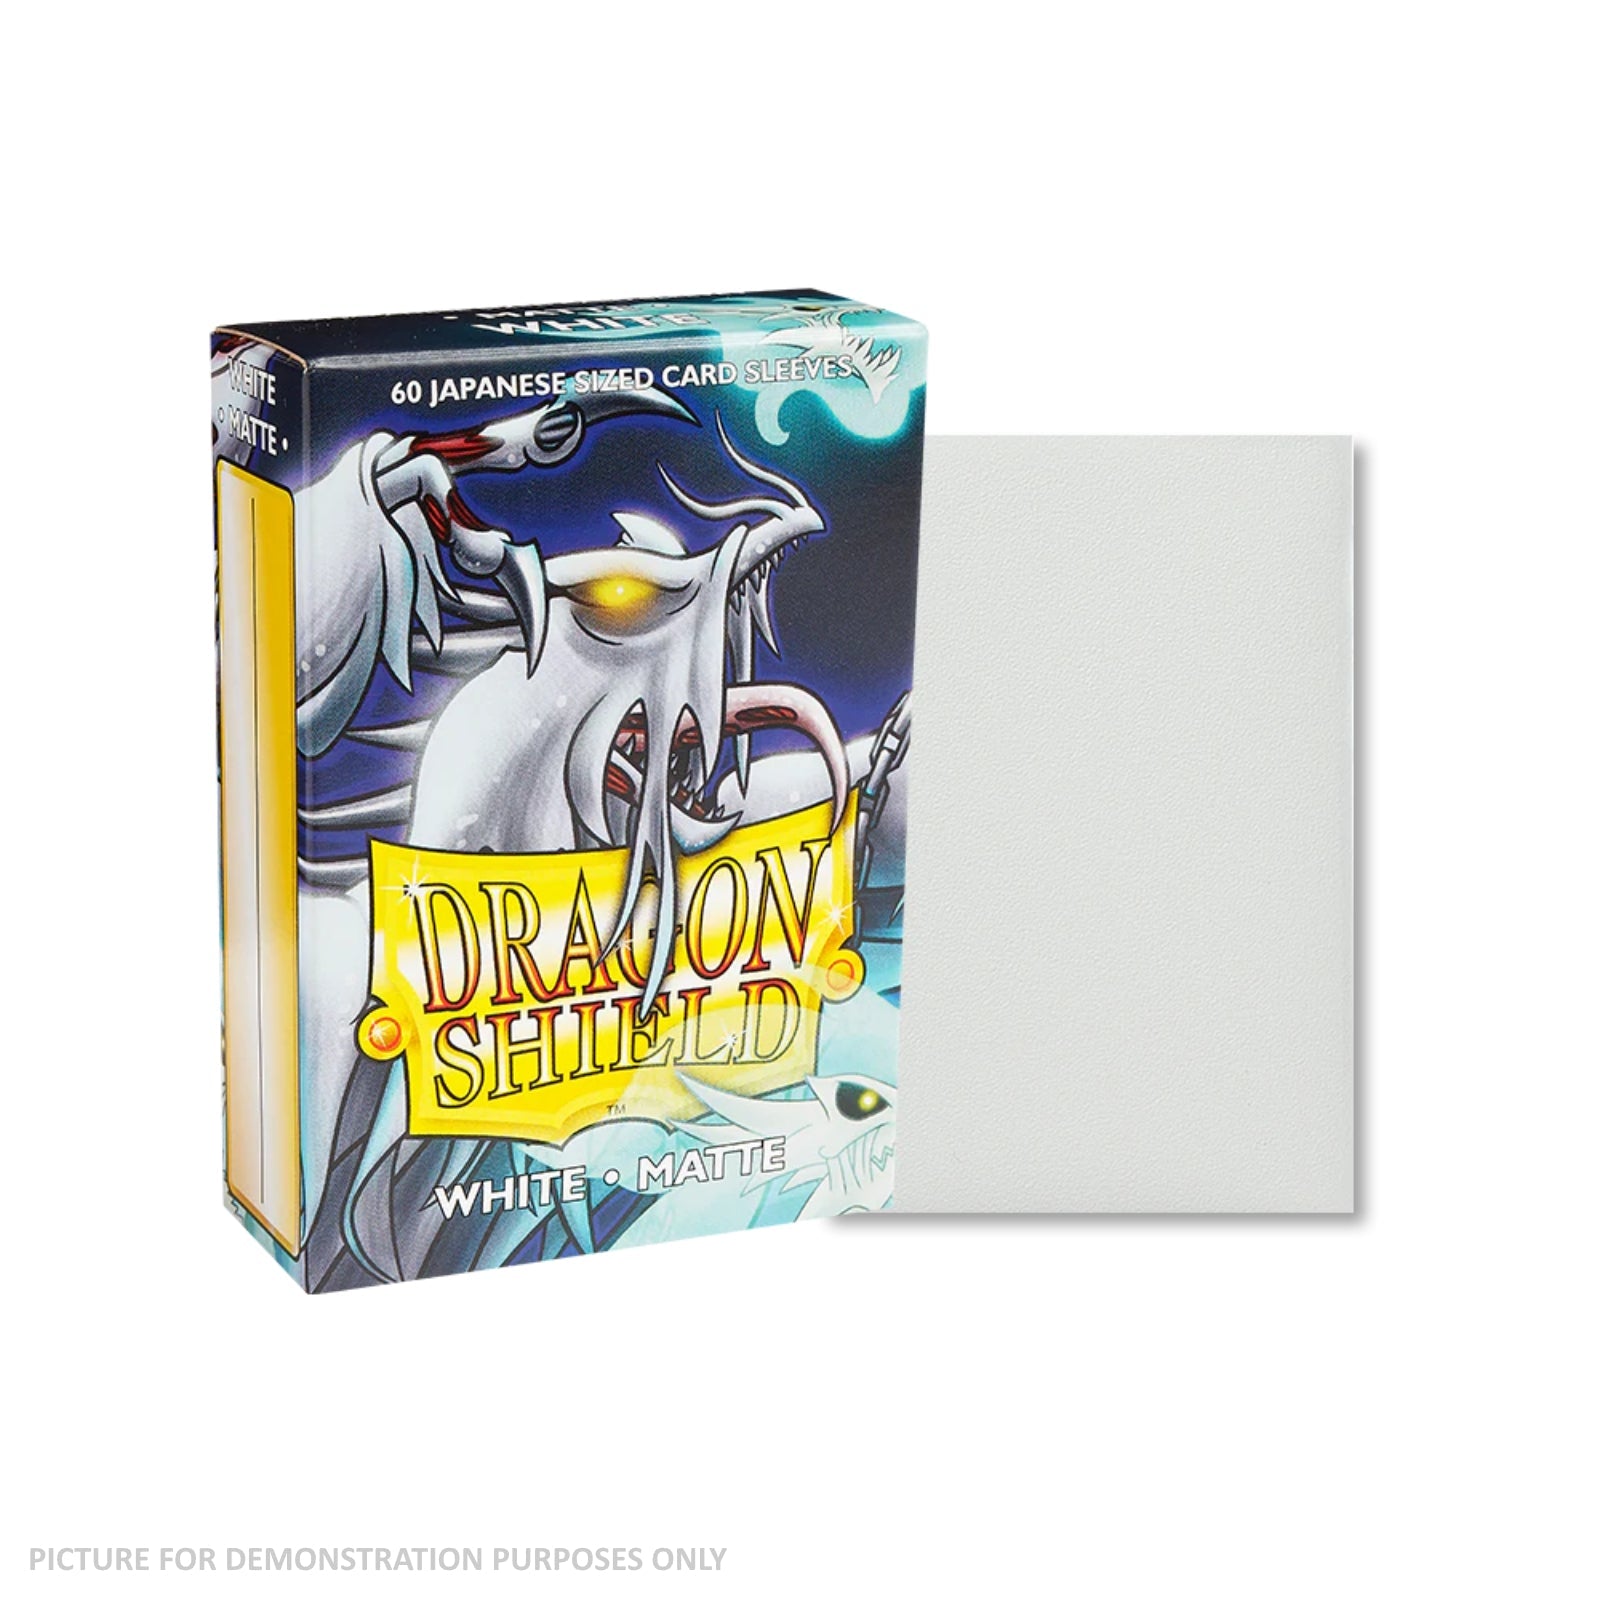 Dragon Shield 60 Japanese Size Card Sleeves - Matte White